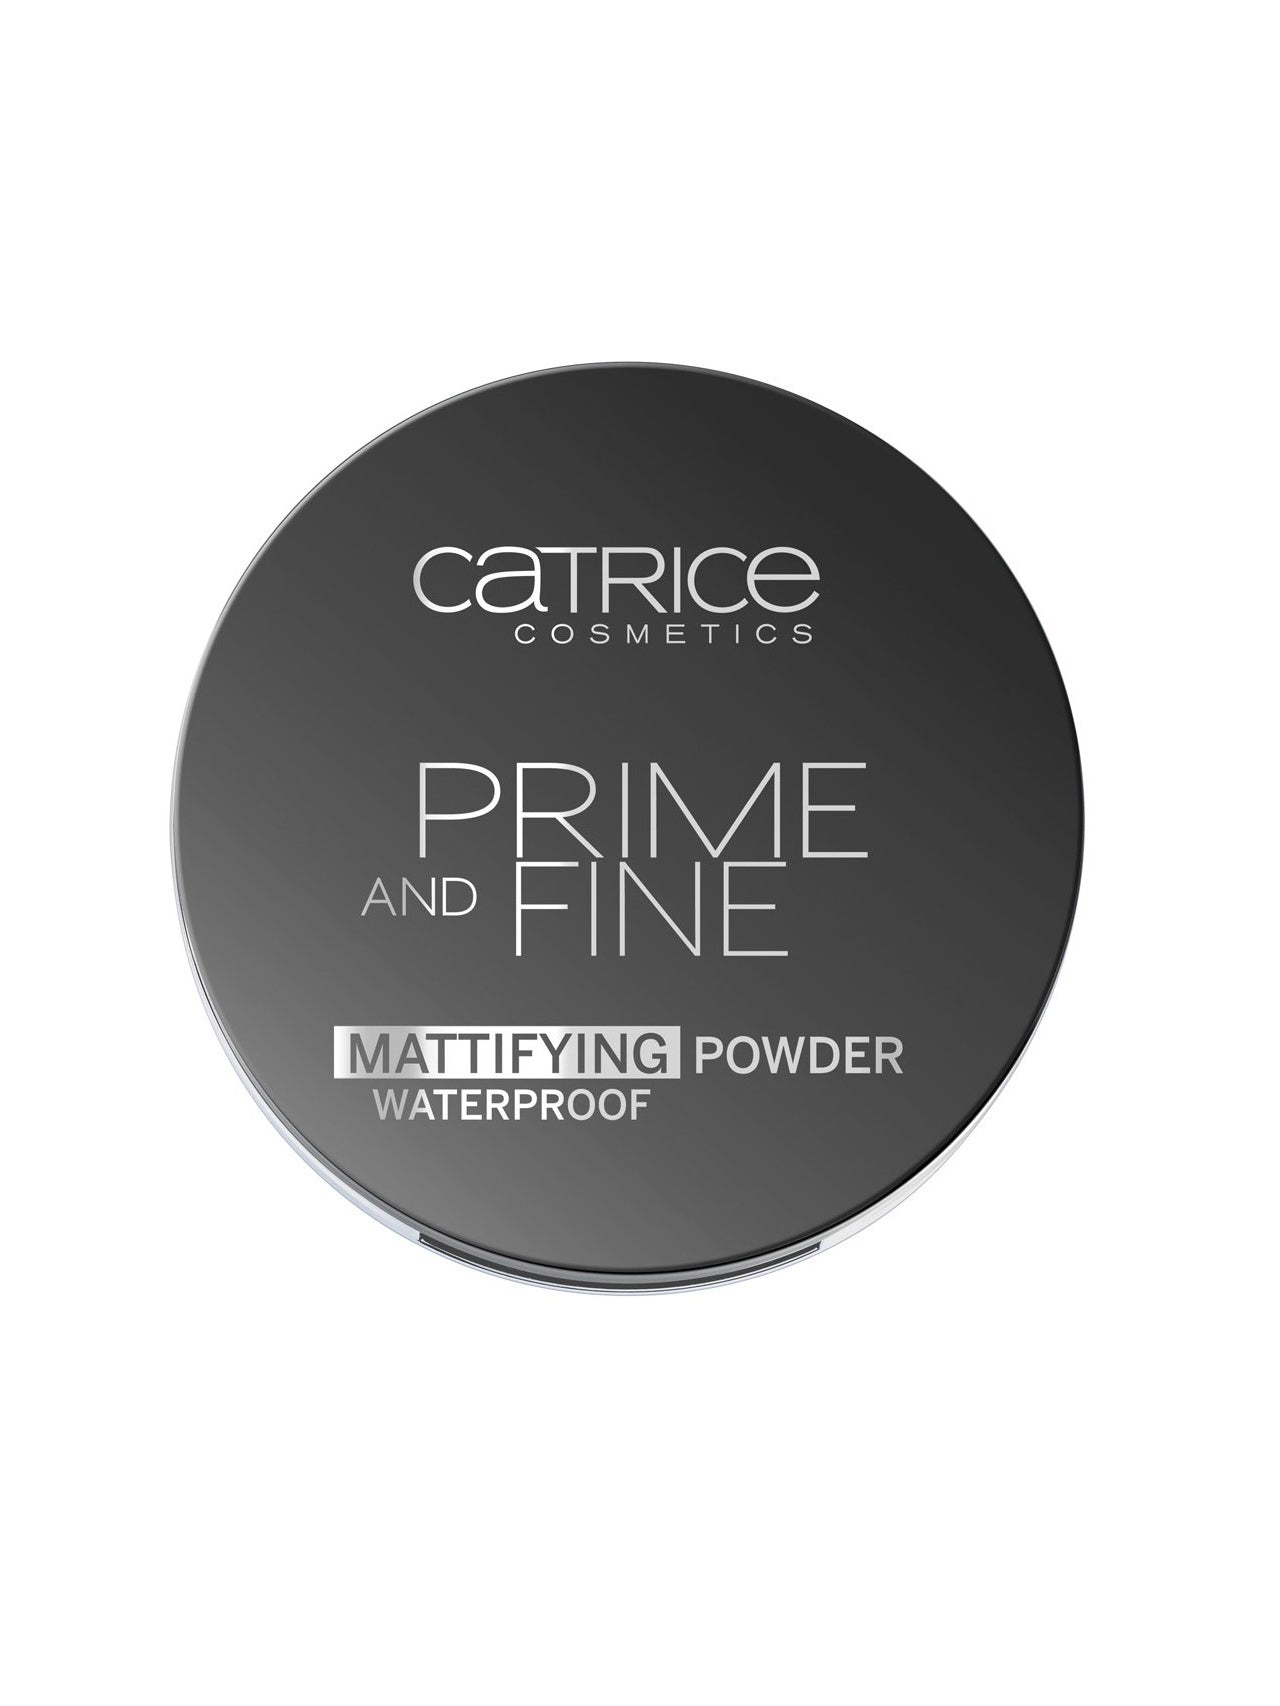 Catrice Prime & Fine Mattifying Powder Waterproof - Shade - 010 Translucent